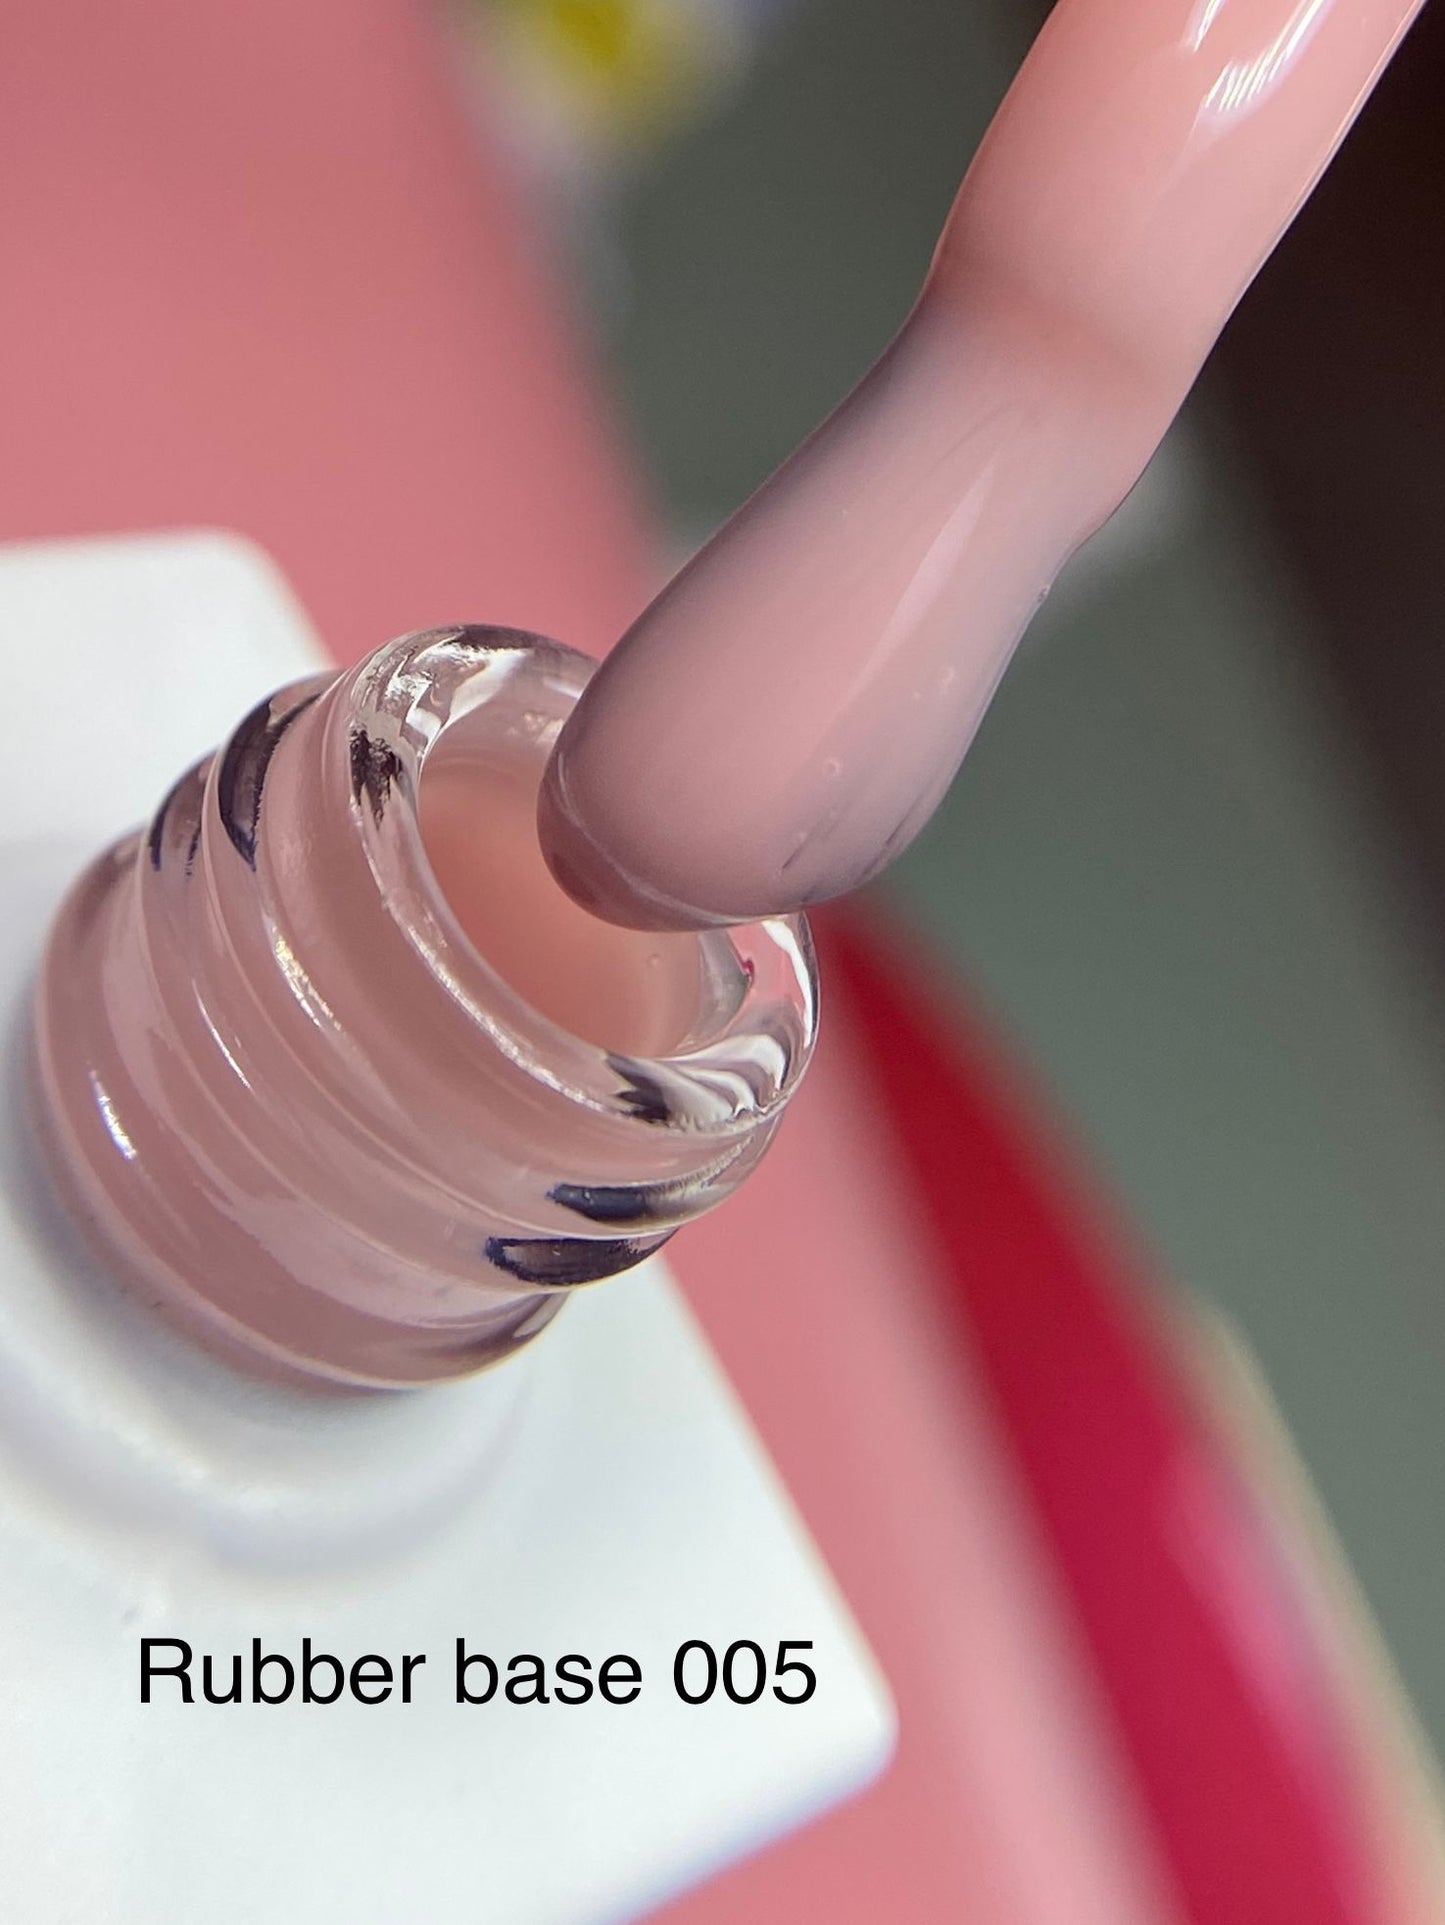 Rubber base 005